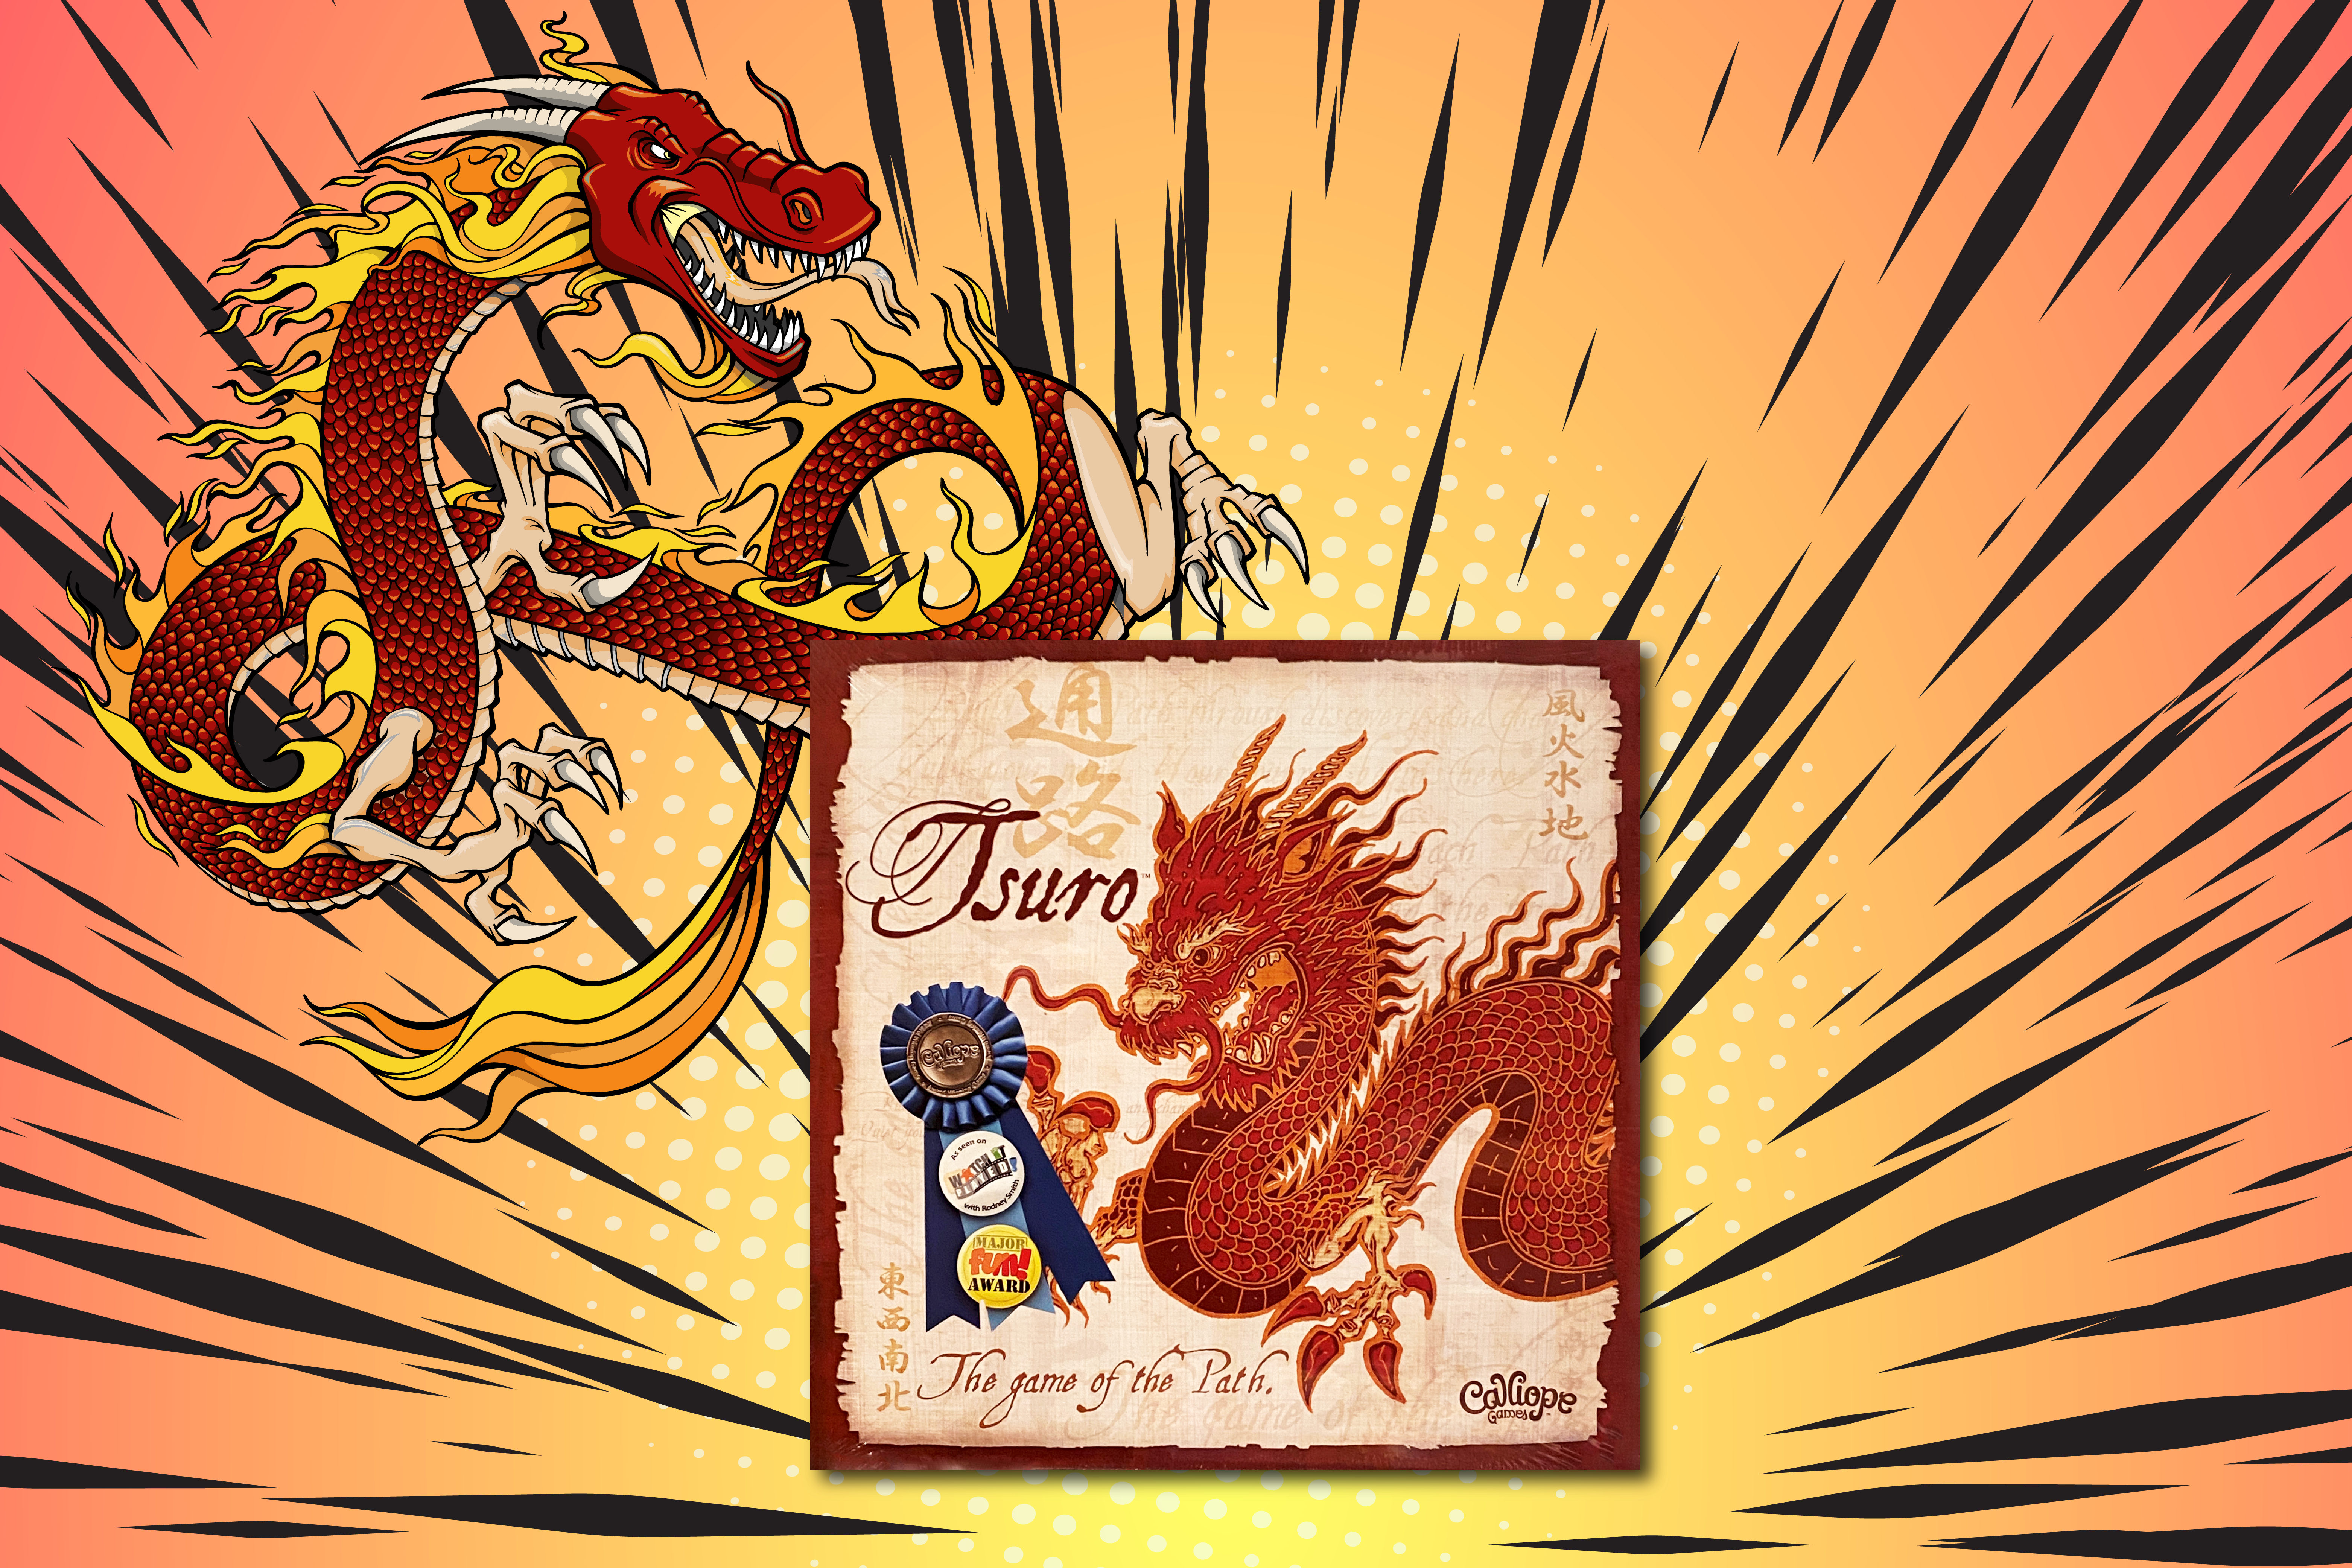 Tsuro Board Game Review Header Image